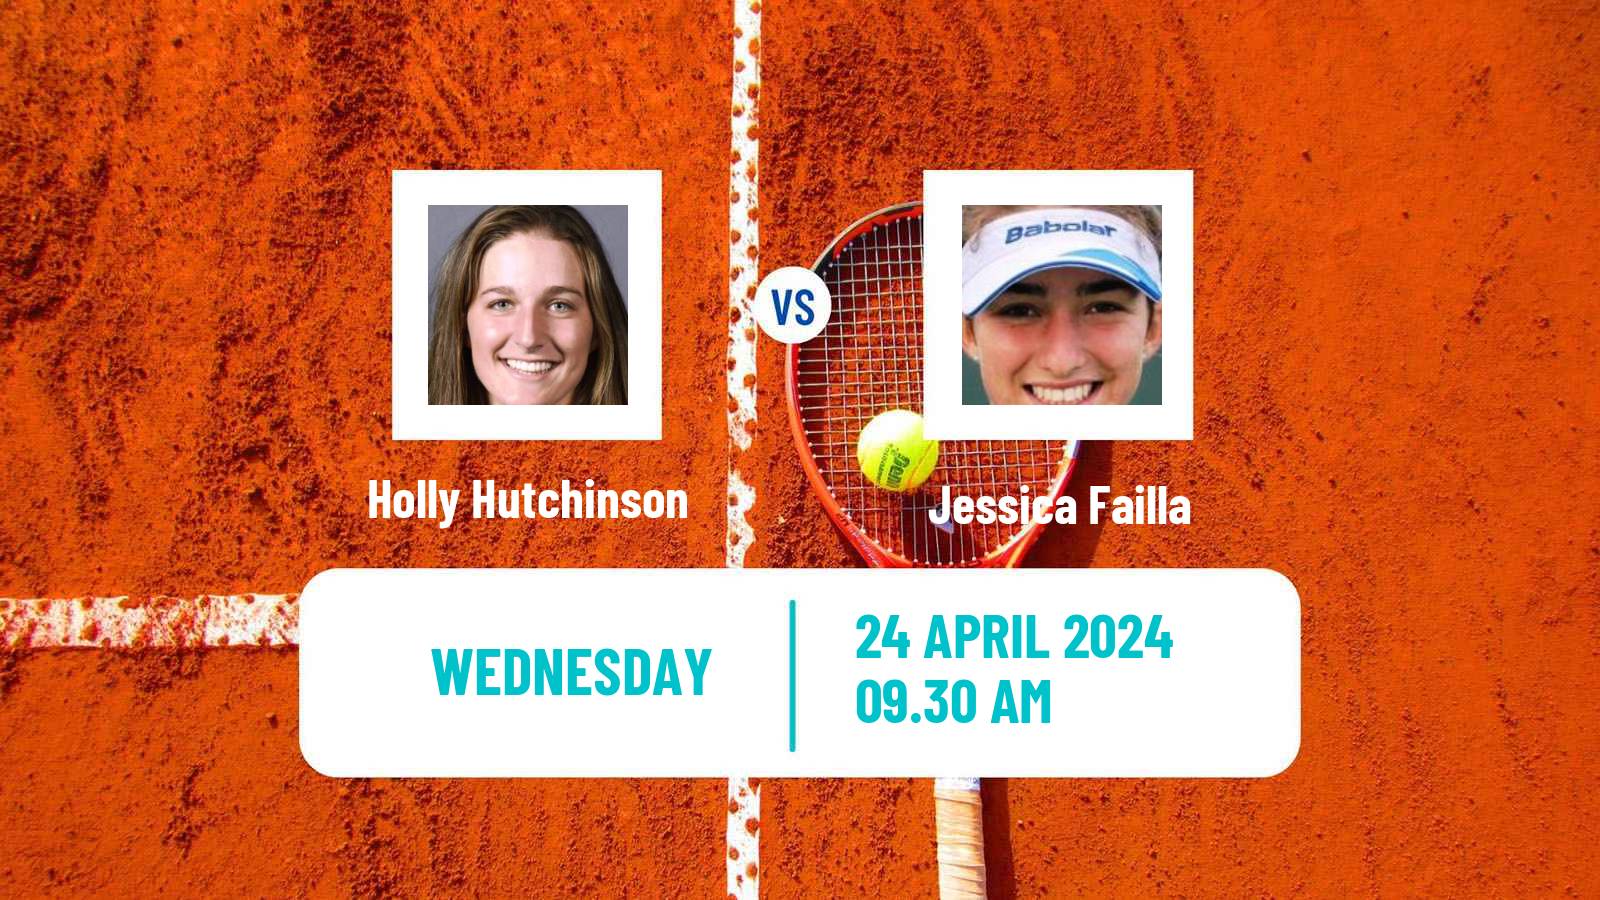 Tennis ITF W35 Nottingham Women Holly Hutchinson - Jessica Failla